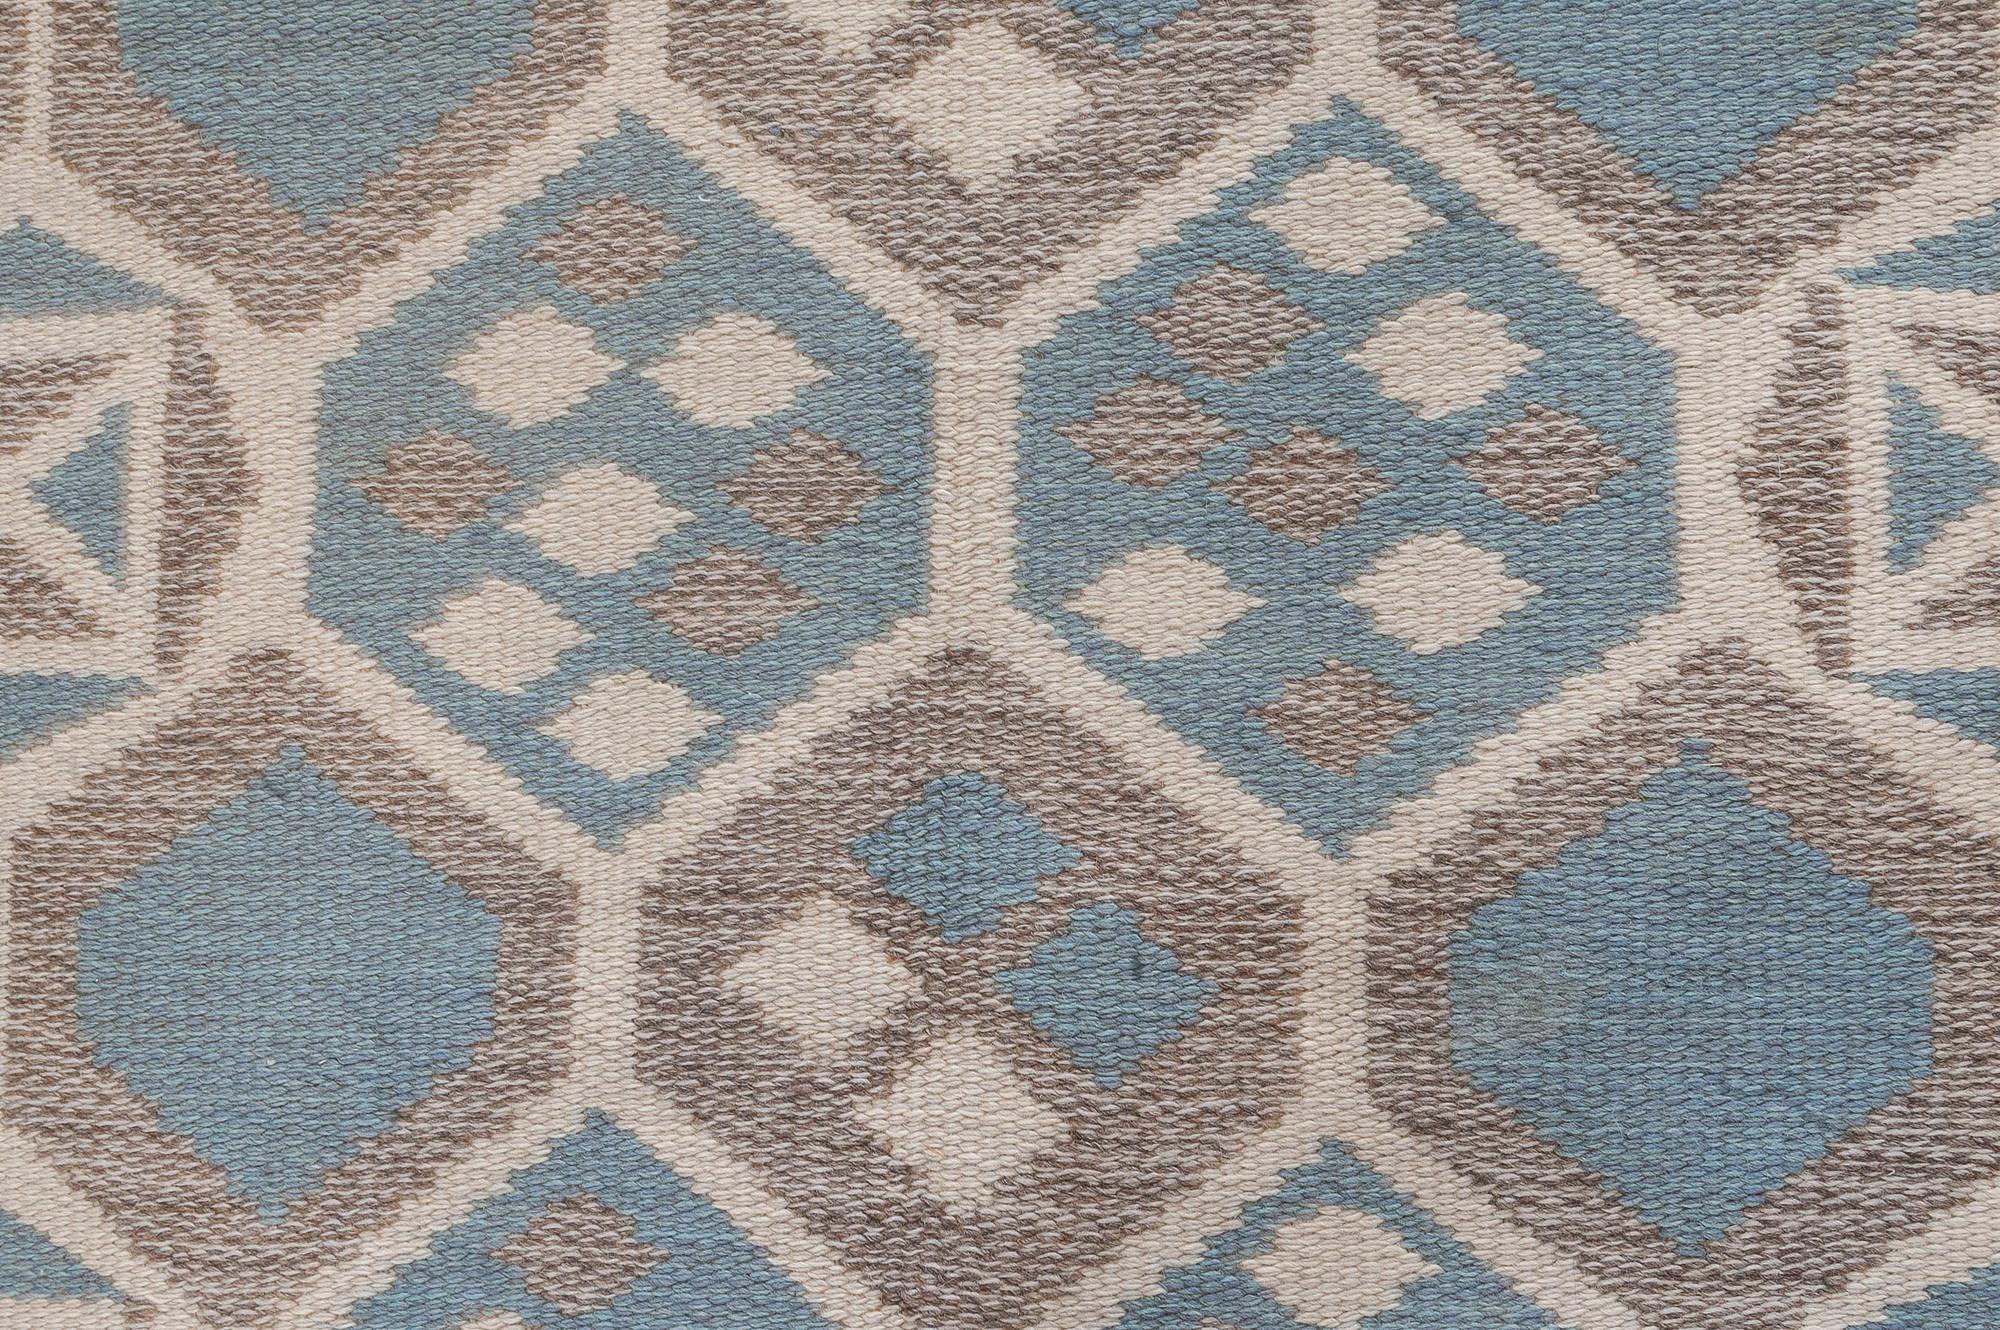 Midcentury Scandinavian Geometric Handmade Wool Rug
Size: 5'4